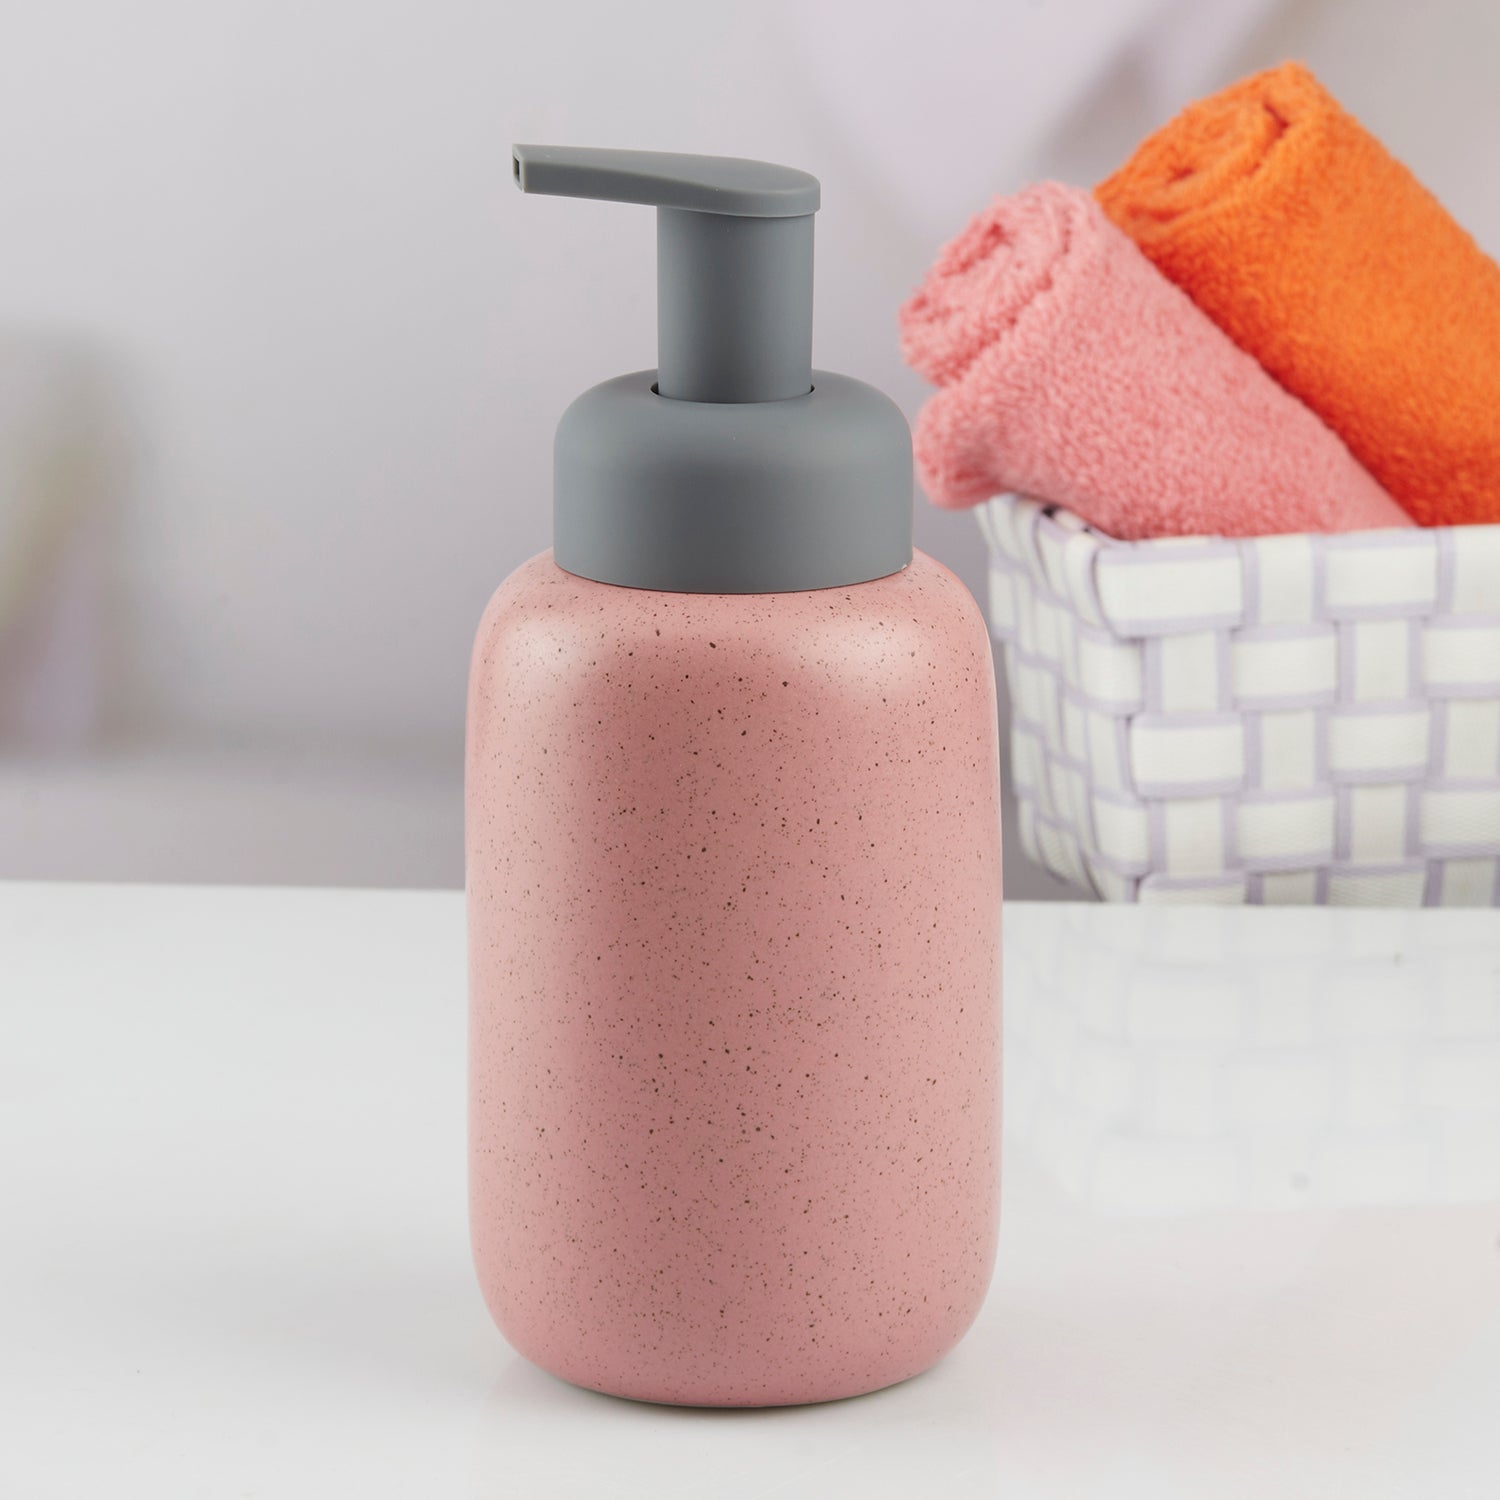 Ceramic Soap Dispenser handwash Pump for Bathroom, Set of 1, Pink (10733)